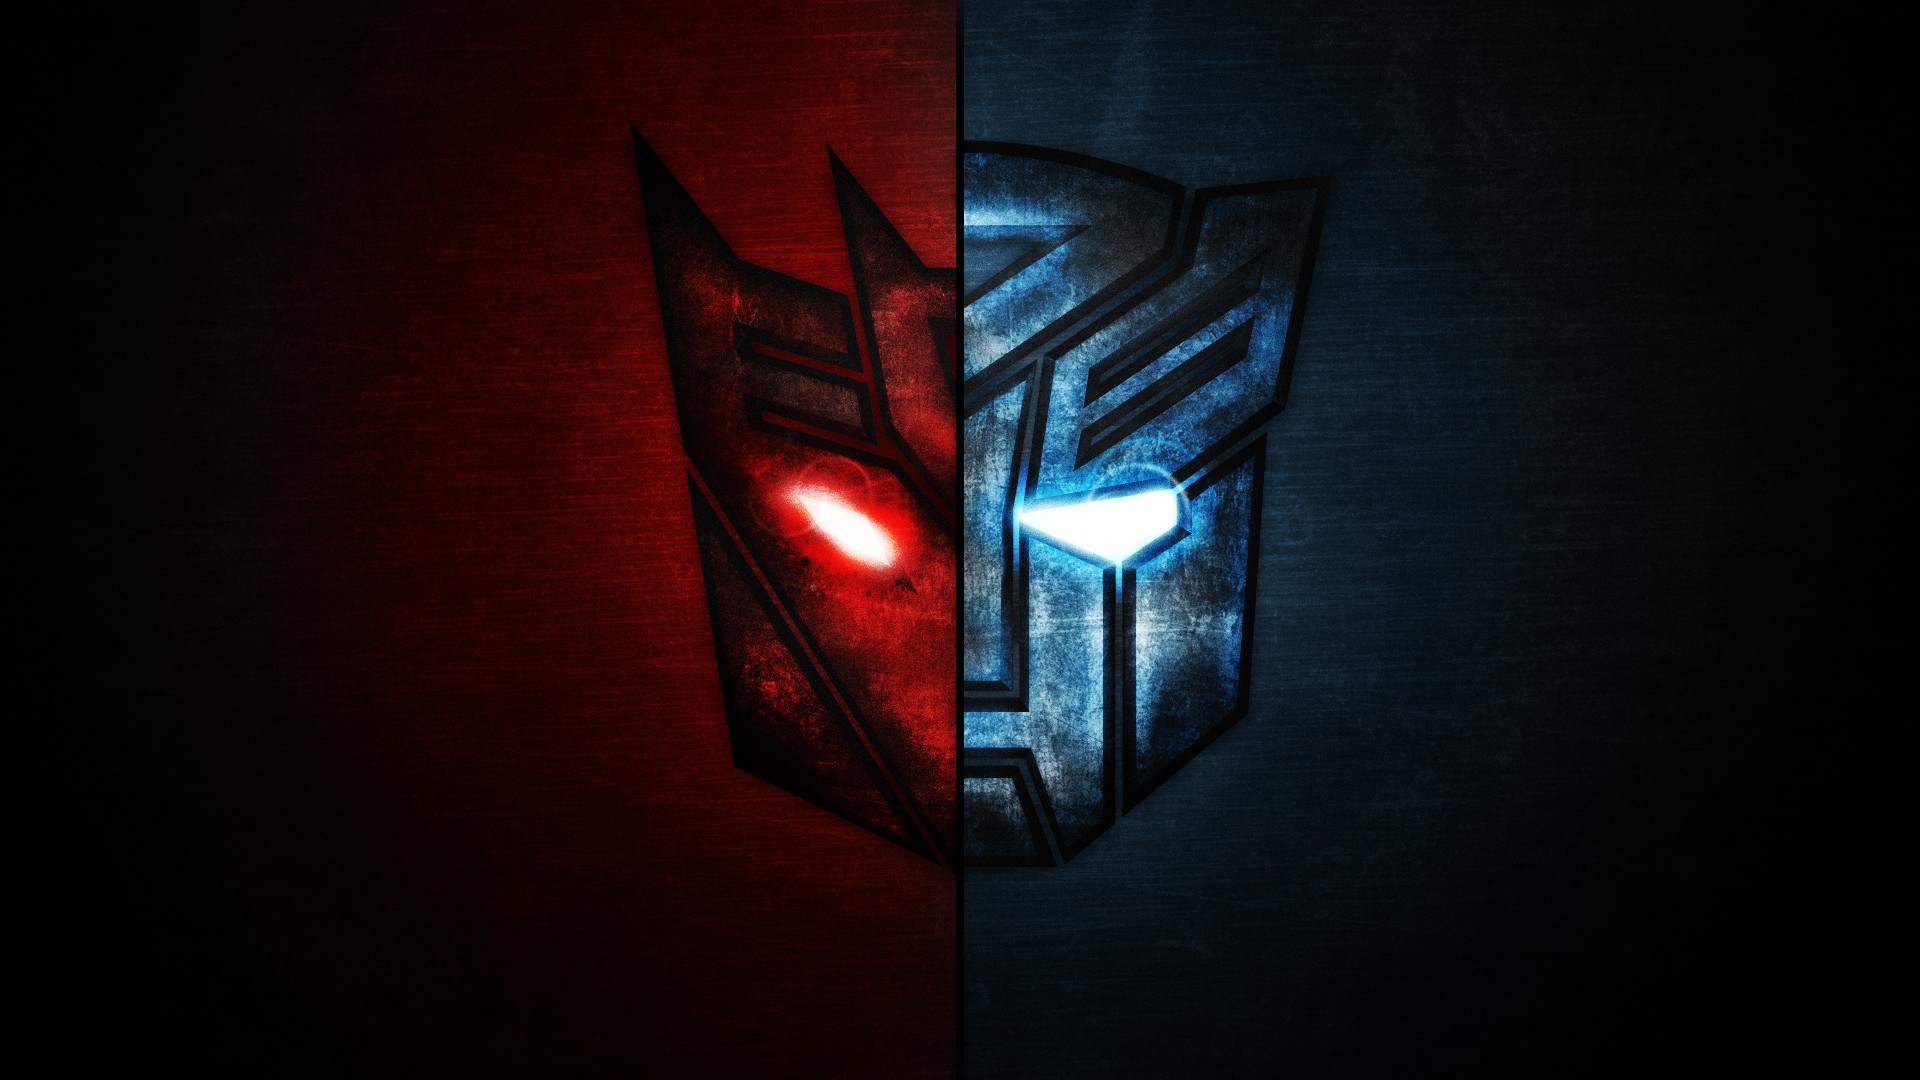 Transformers Good vs Evil Wallpaper for Desktop and Mobiles iPhone 7 Plus /  iPhone 8 Plus - HD Wallpaper 